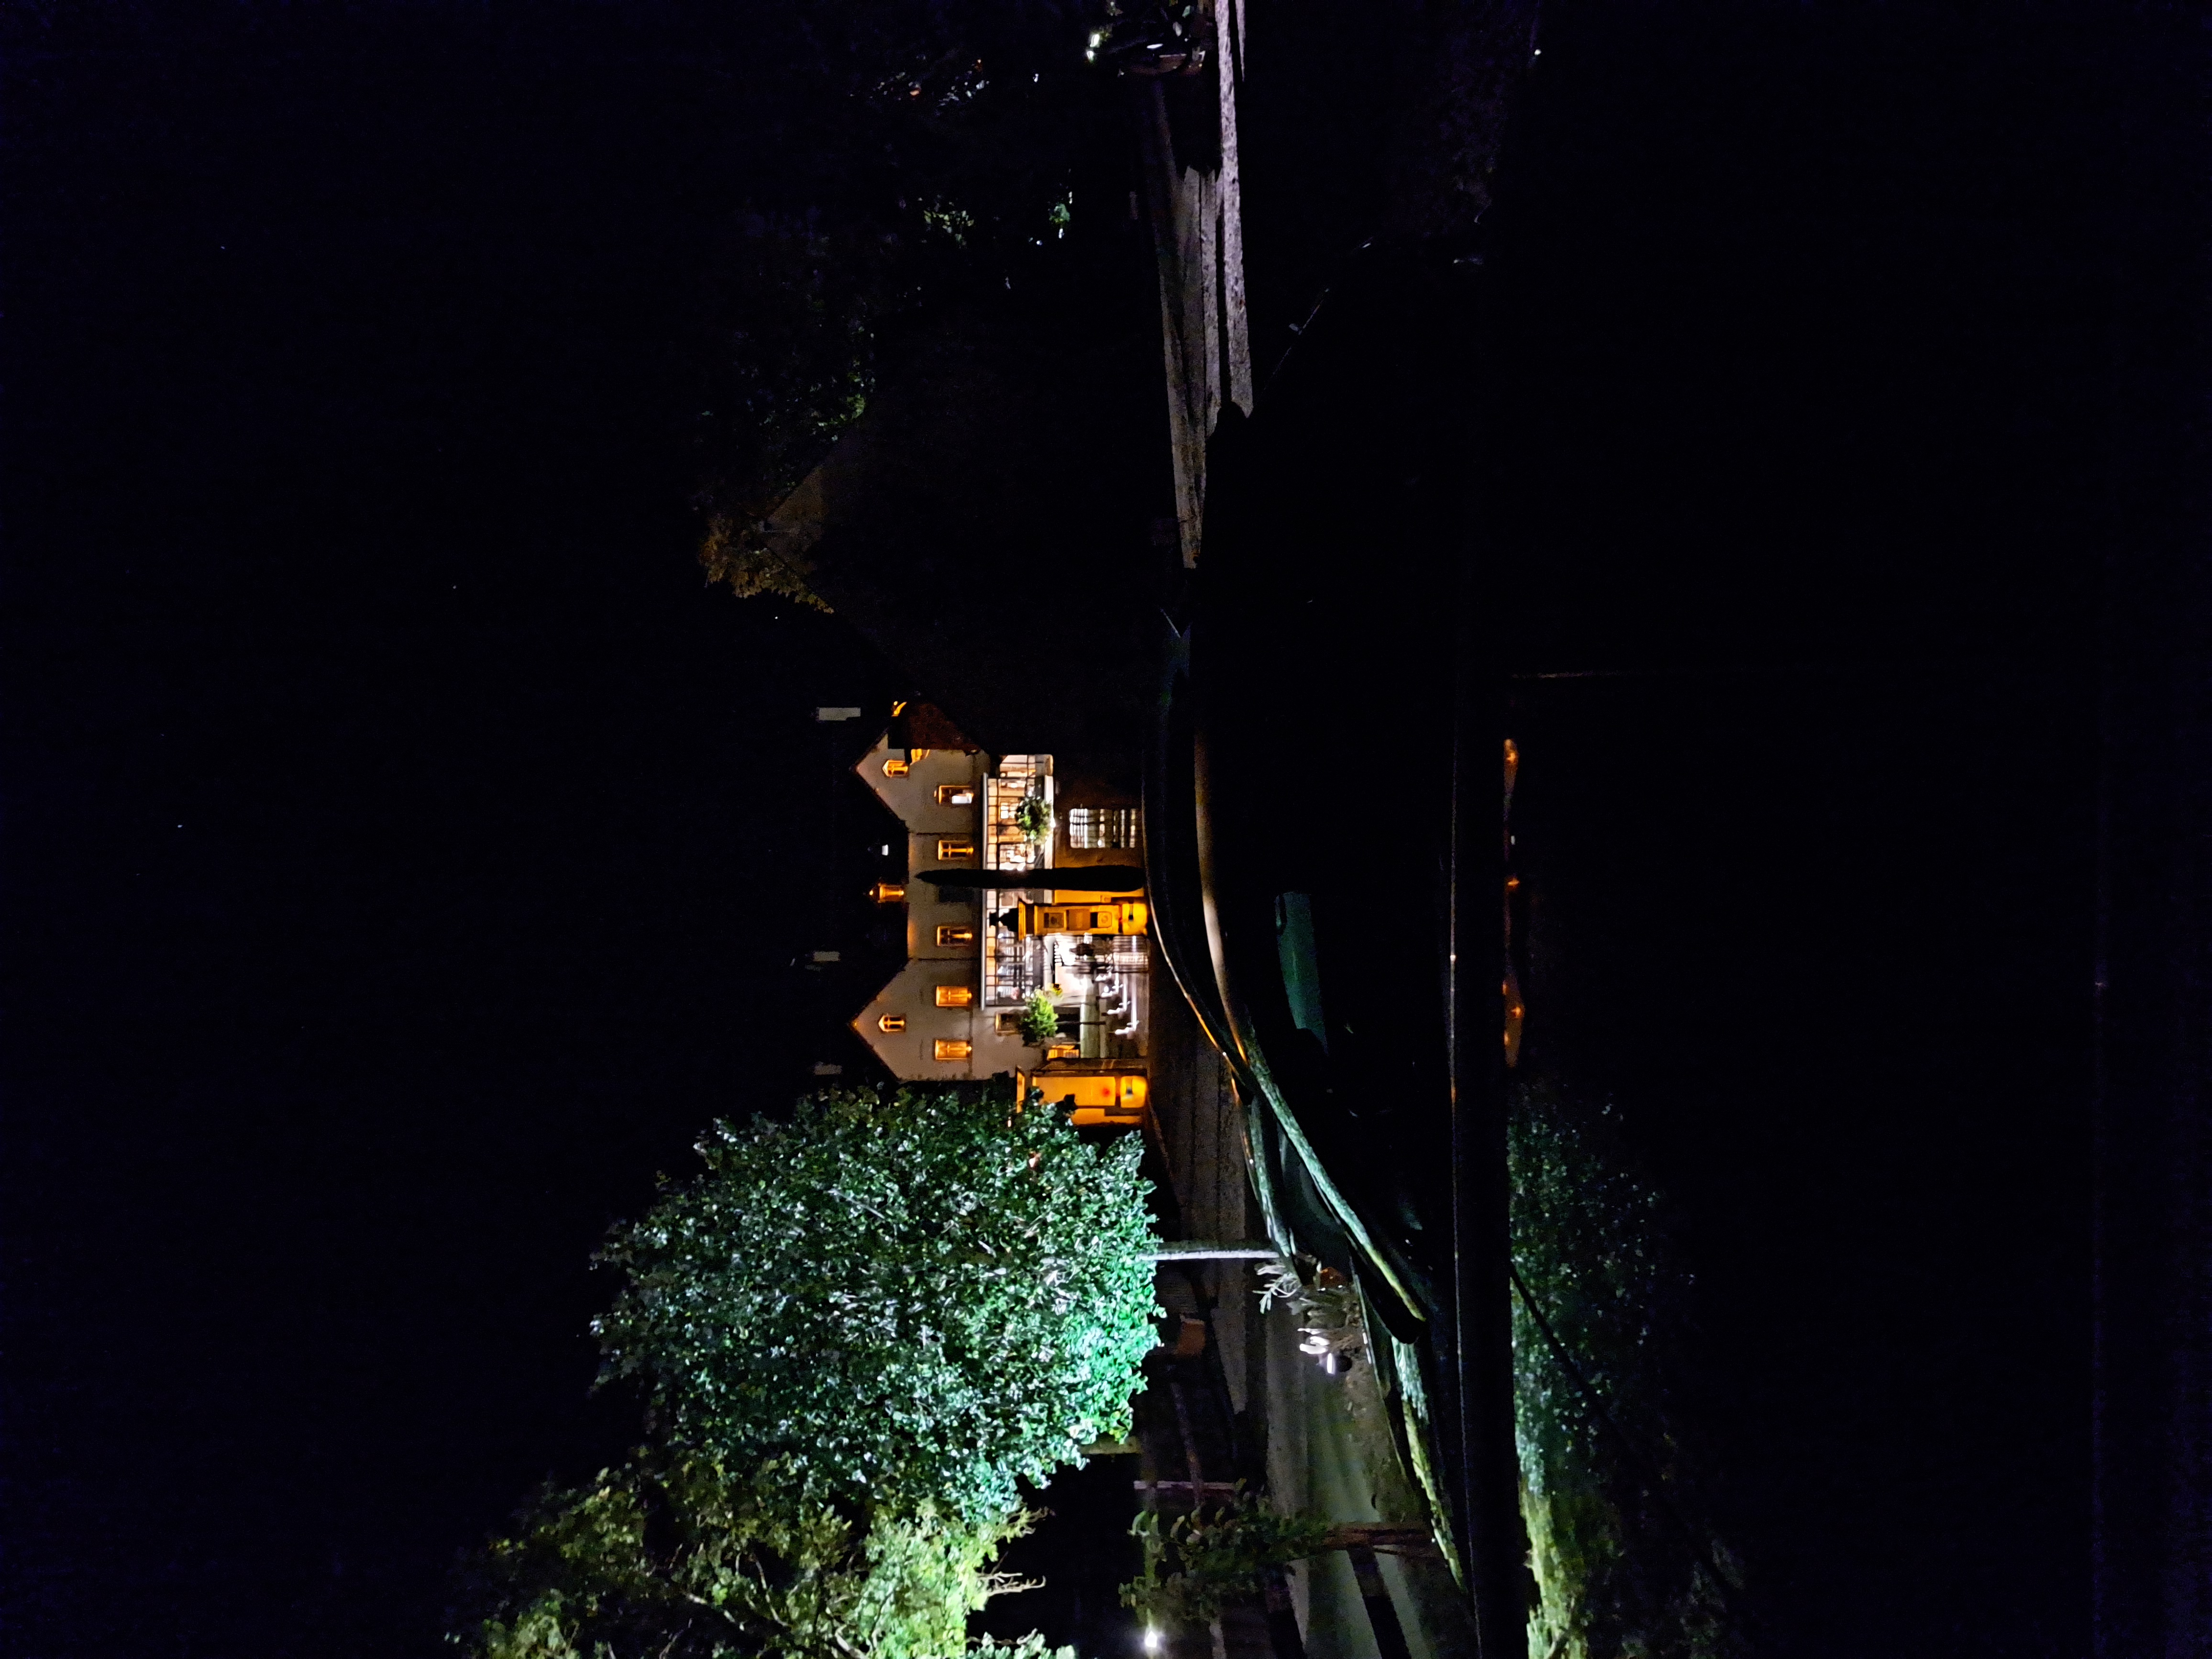 Domaine de Rymska at night